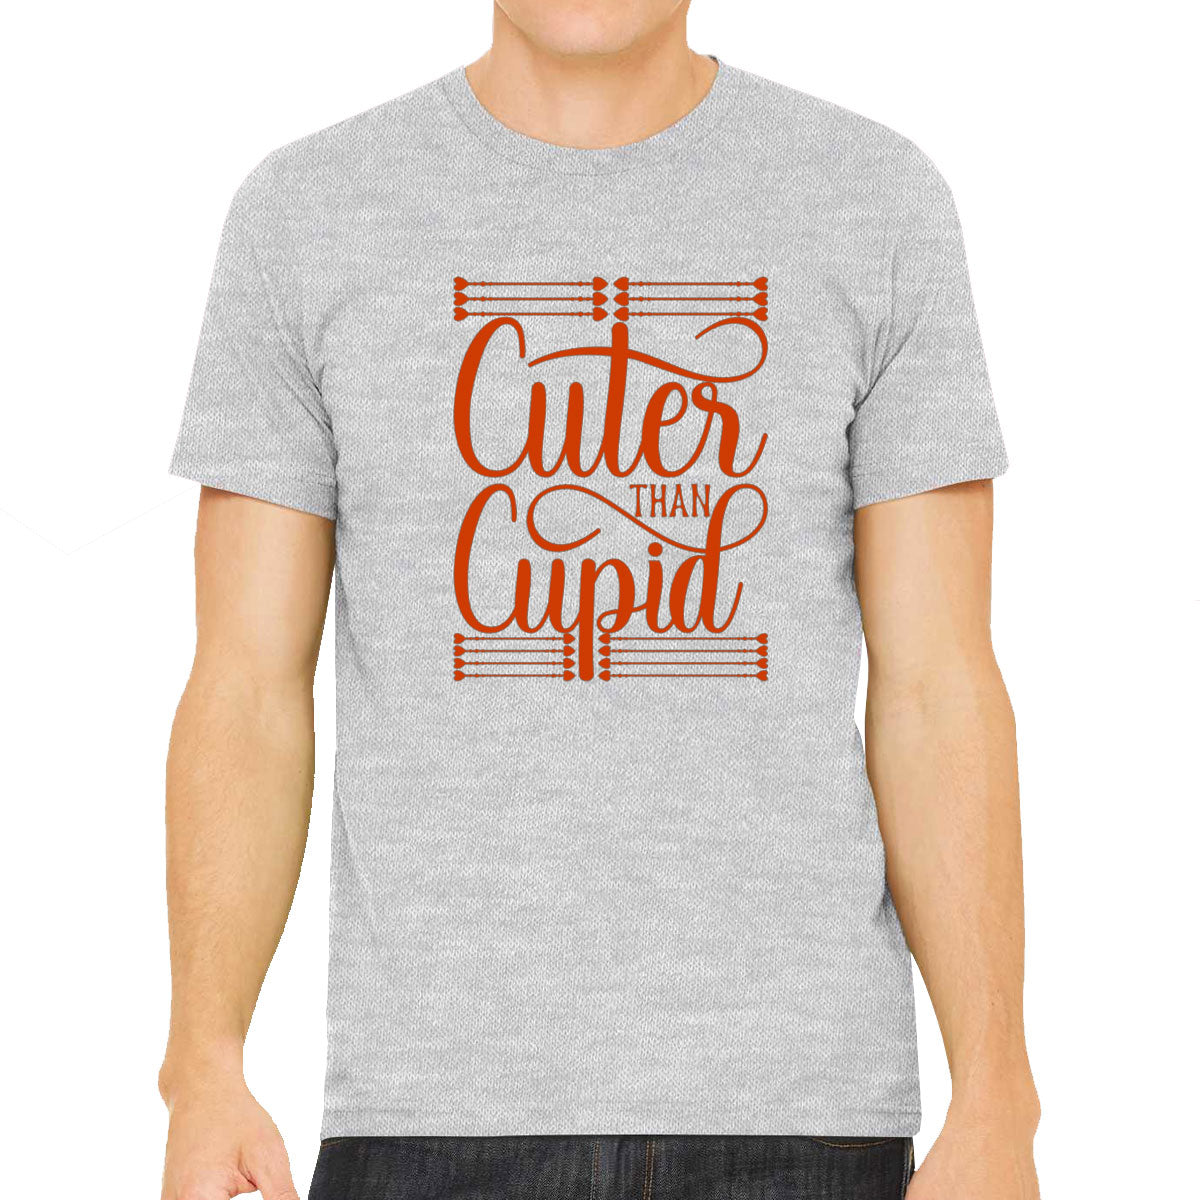 Cuter Than Cupid Men's T-shirt